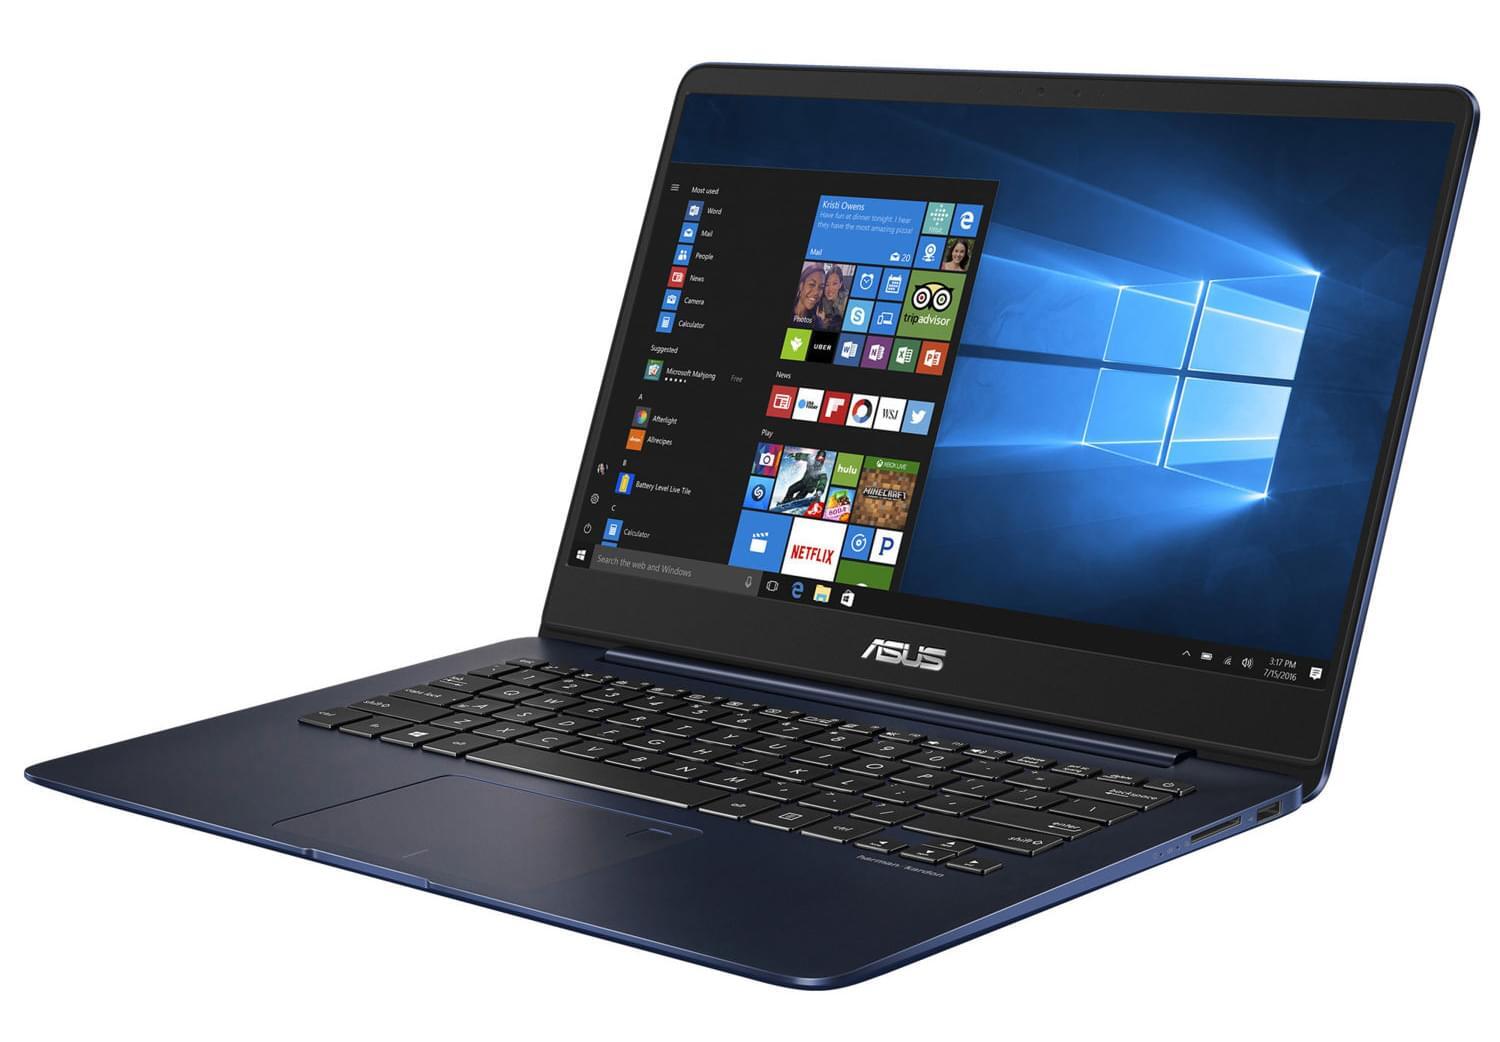 Laptop Asus ZenBook UX430UN-GV097T - Intel Core i7-8550U, 8GB RAM, 256GB SSD, VGA Nvidia Geforce MX150 2GB, 14 inch